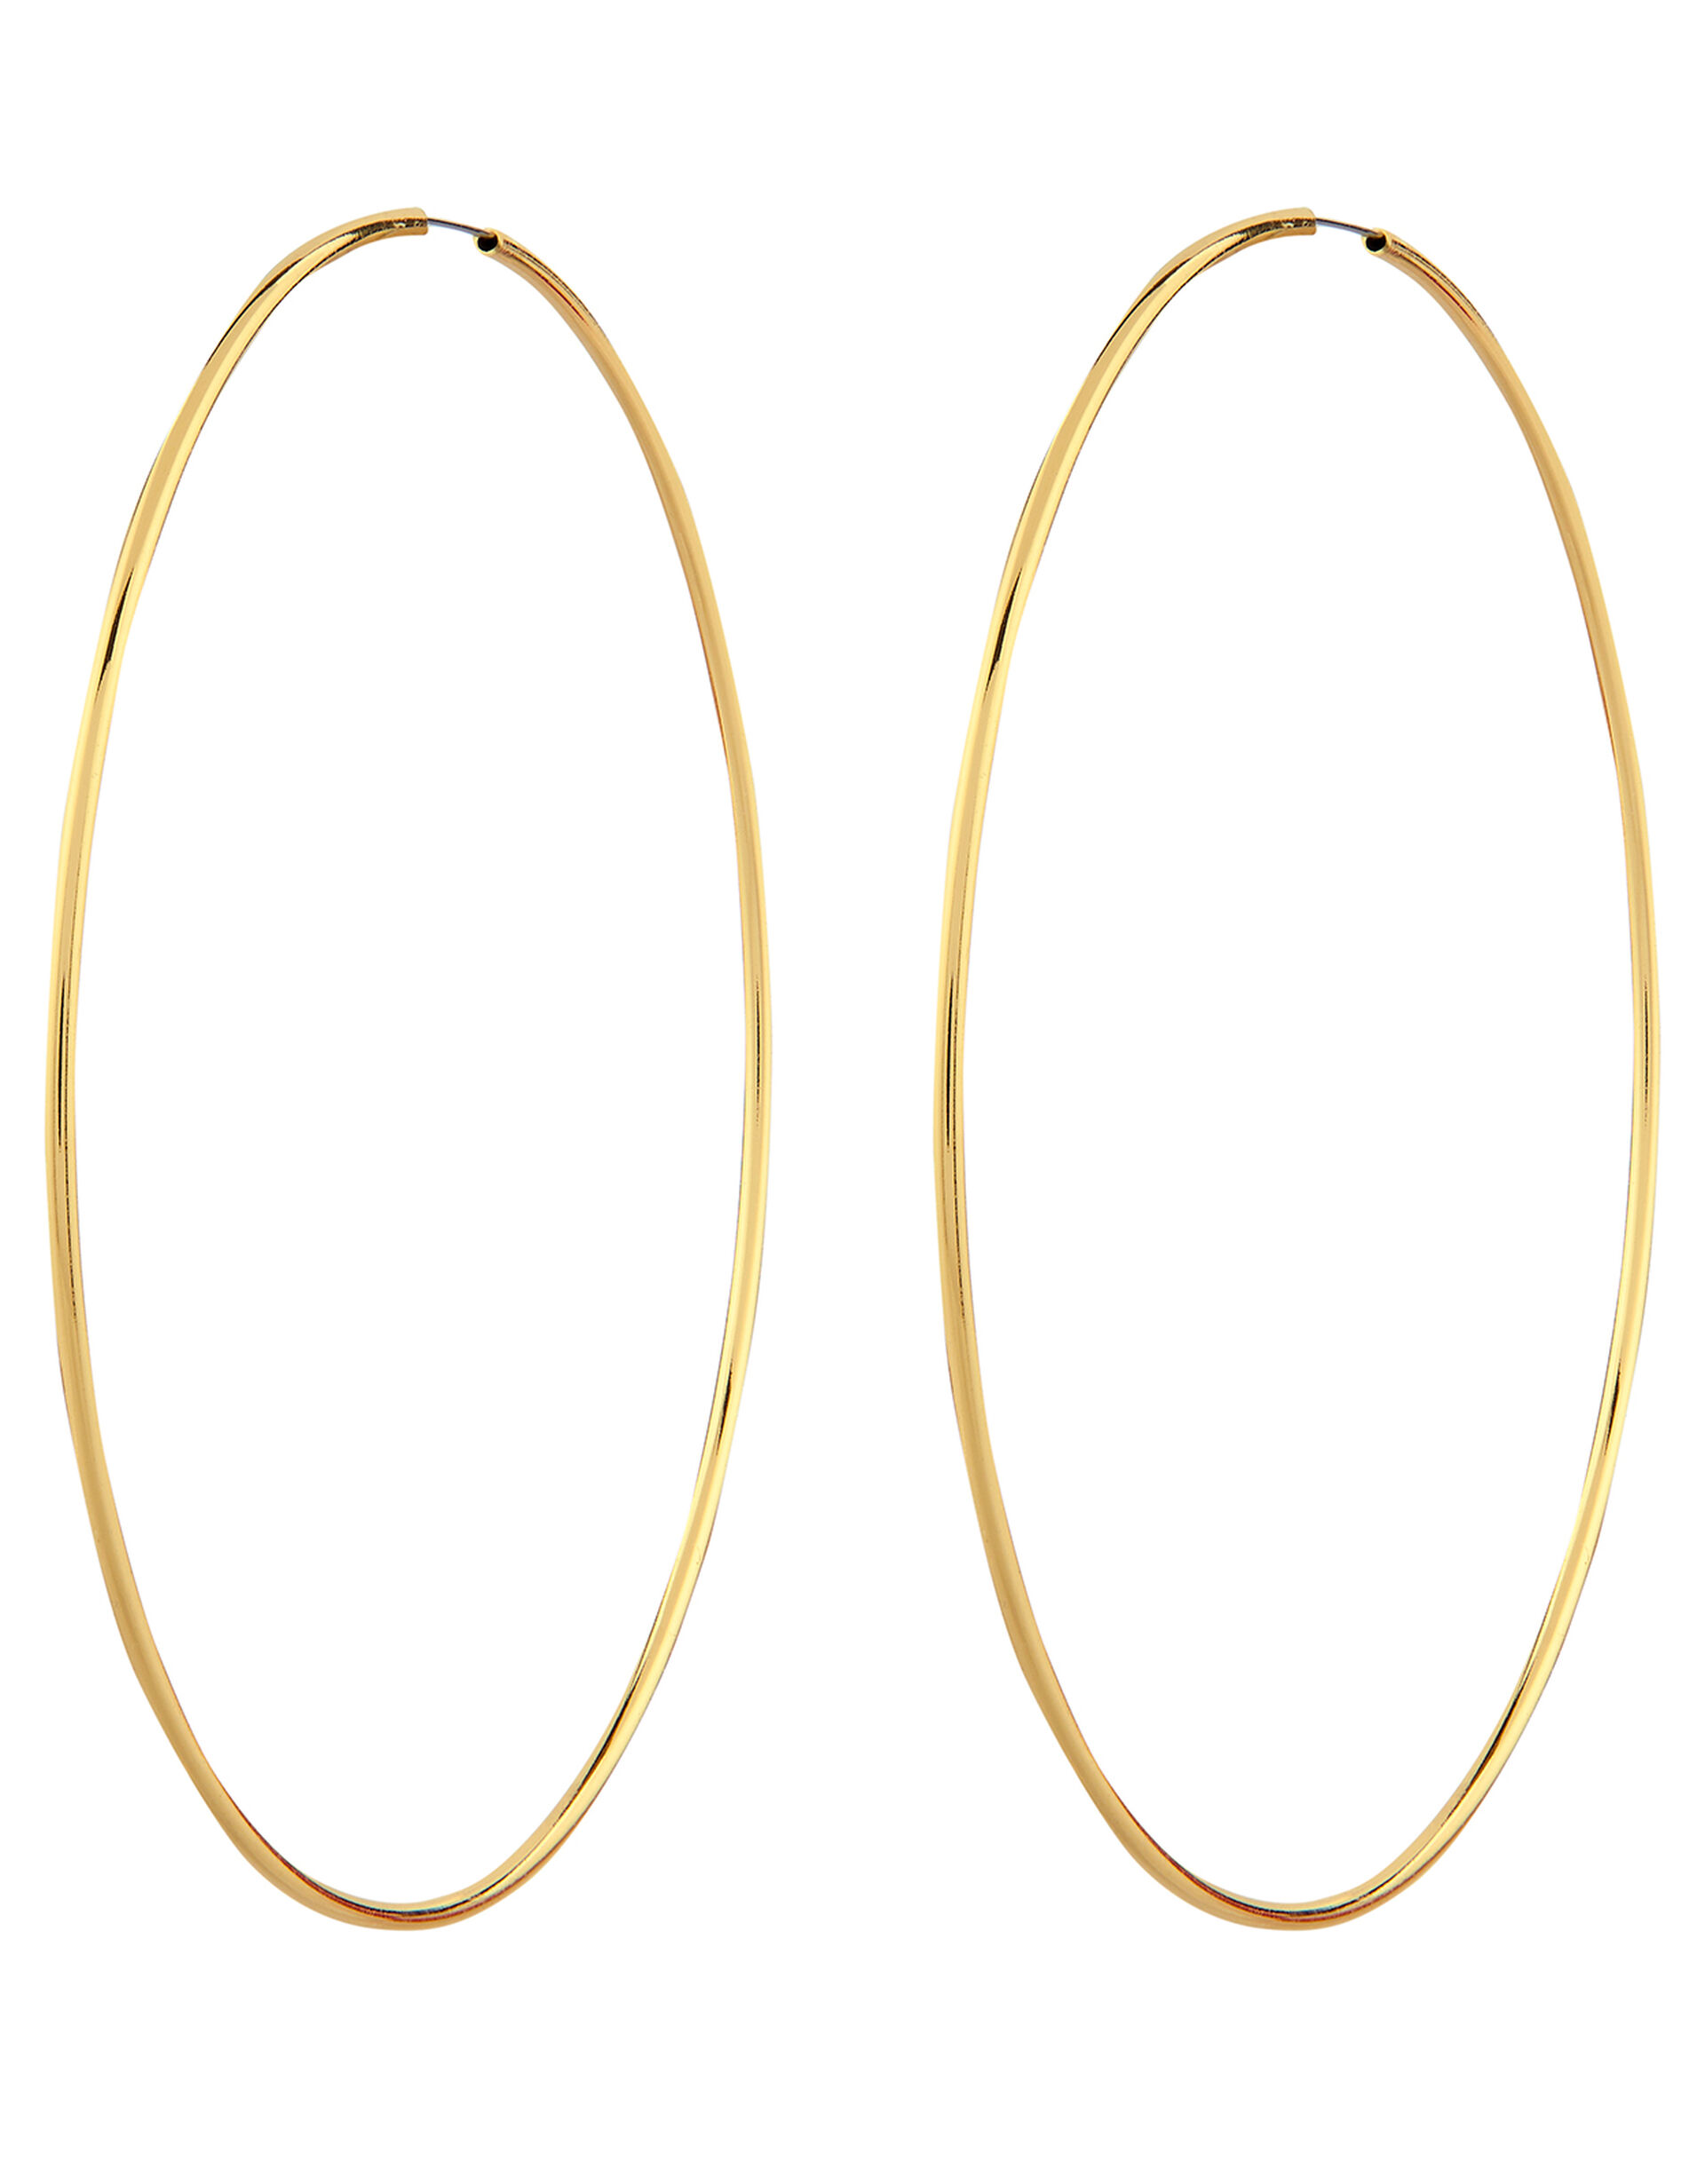 Gold-Plated Large Hoop Earrings, , large